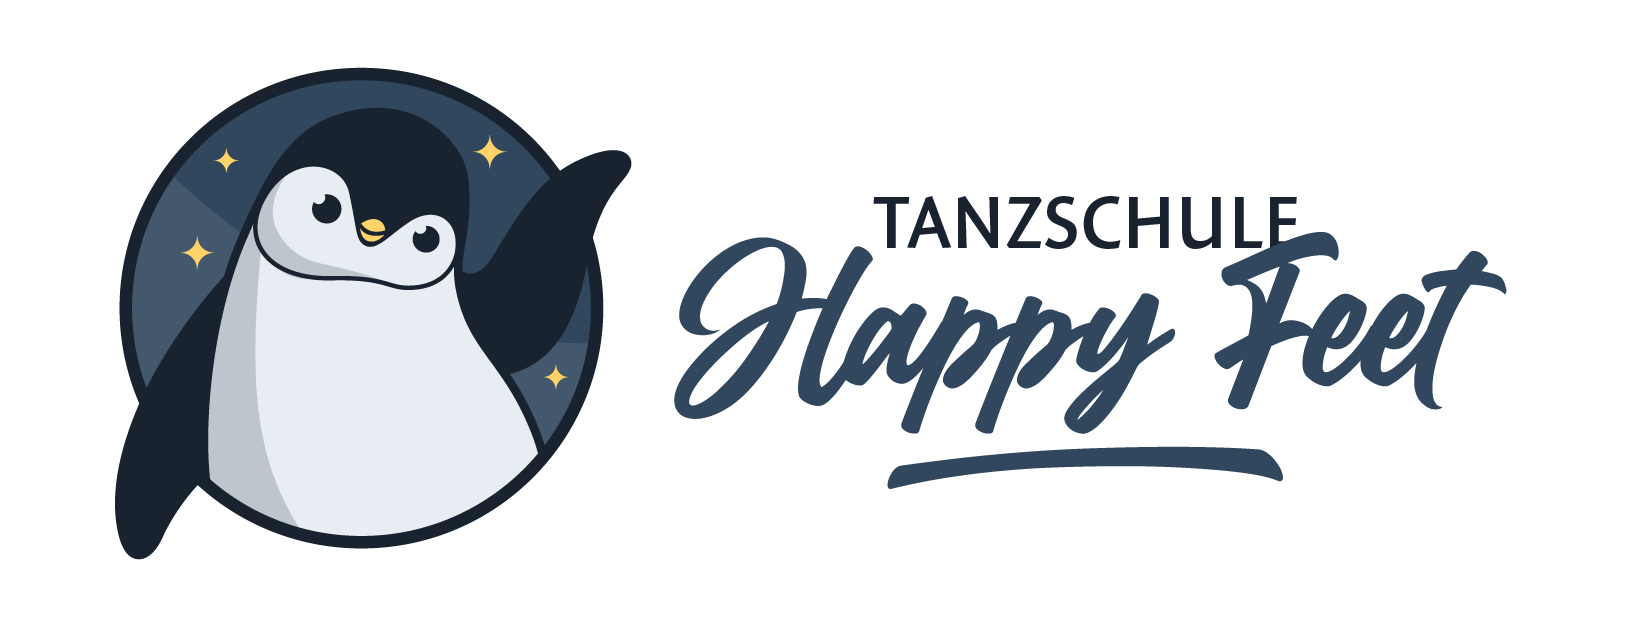 Tanzschule Happy Feet GmbH